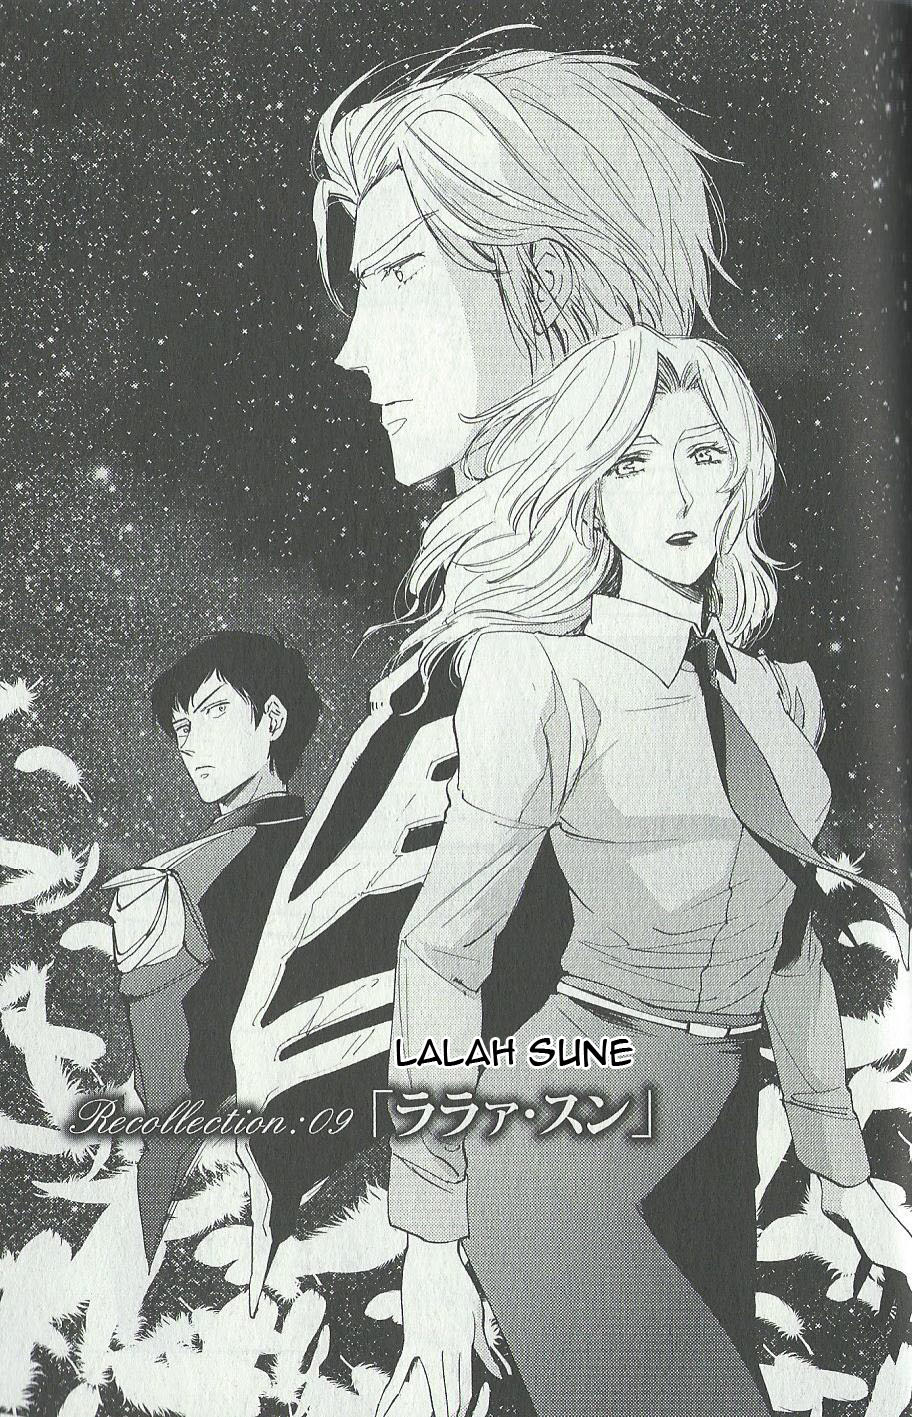 Kidou Senshi Gundam Gyakushuu no Char: Beyond the Time Vol. 2 Ch. 9 Lalah Sune